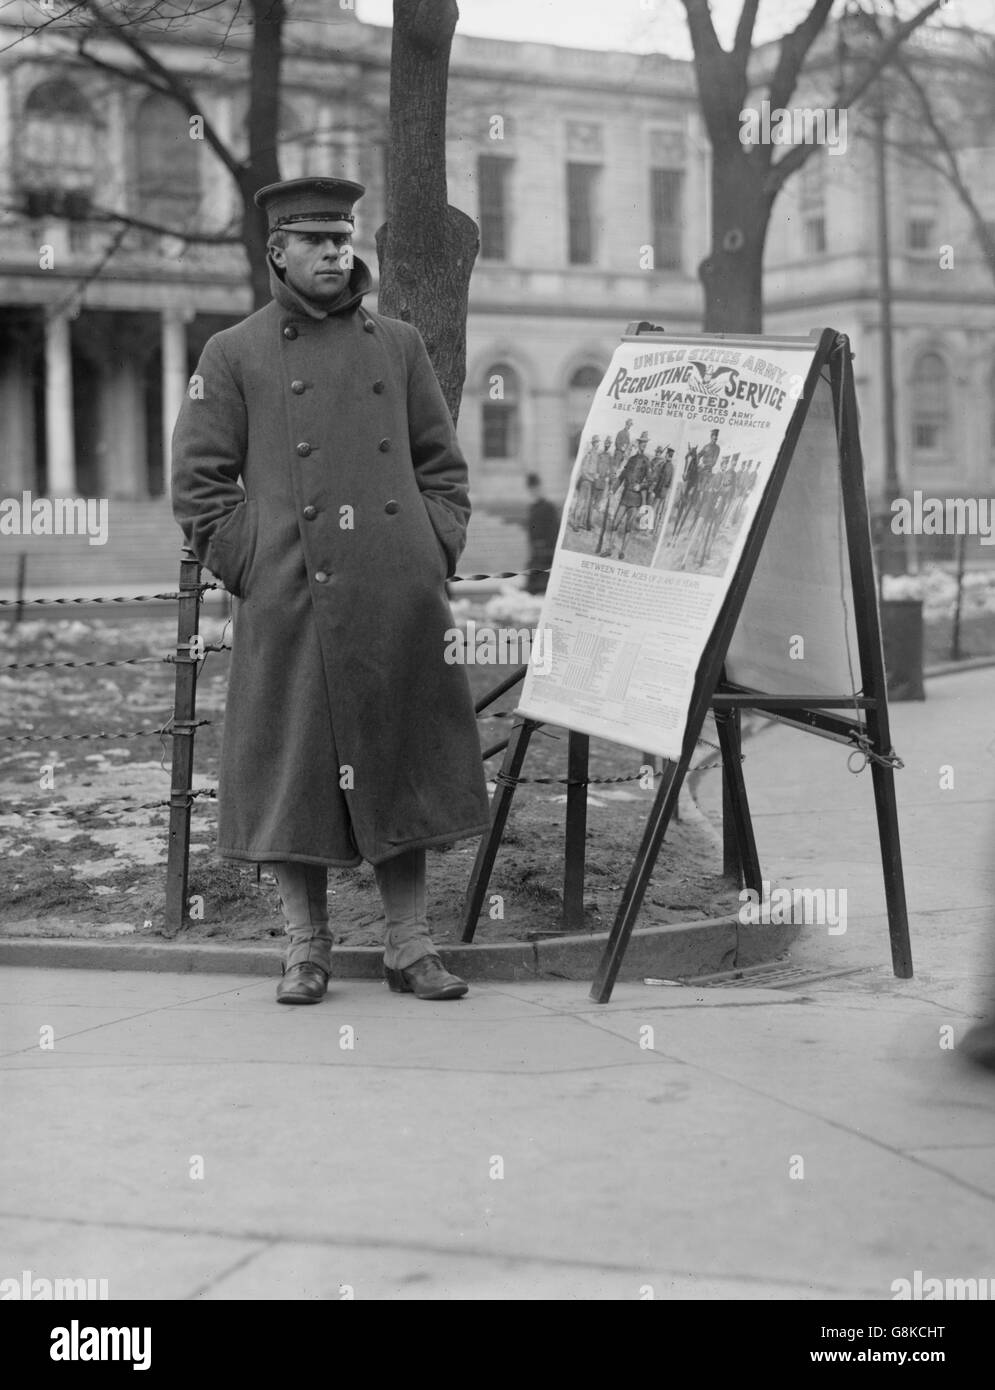 Recruiting for U.S. Army, City Hall Park, New York City, New York, USA, Bain News Service, February 1908 Stock Photo